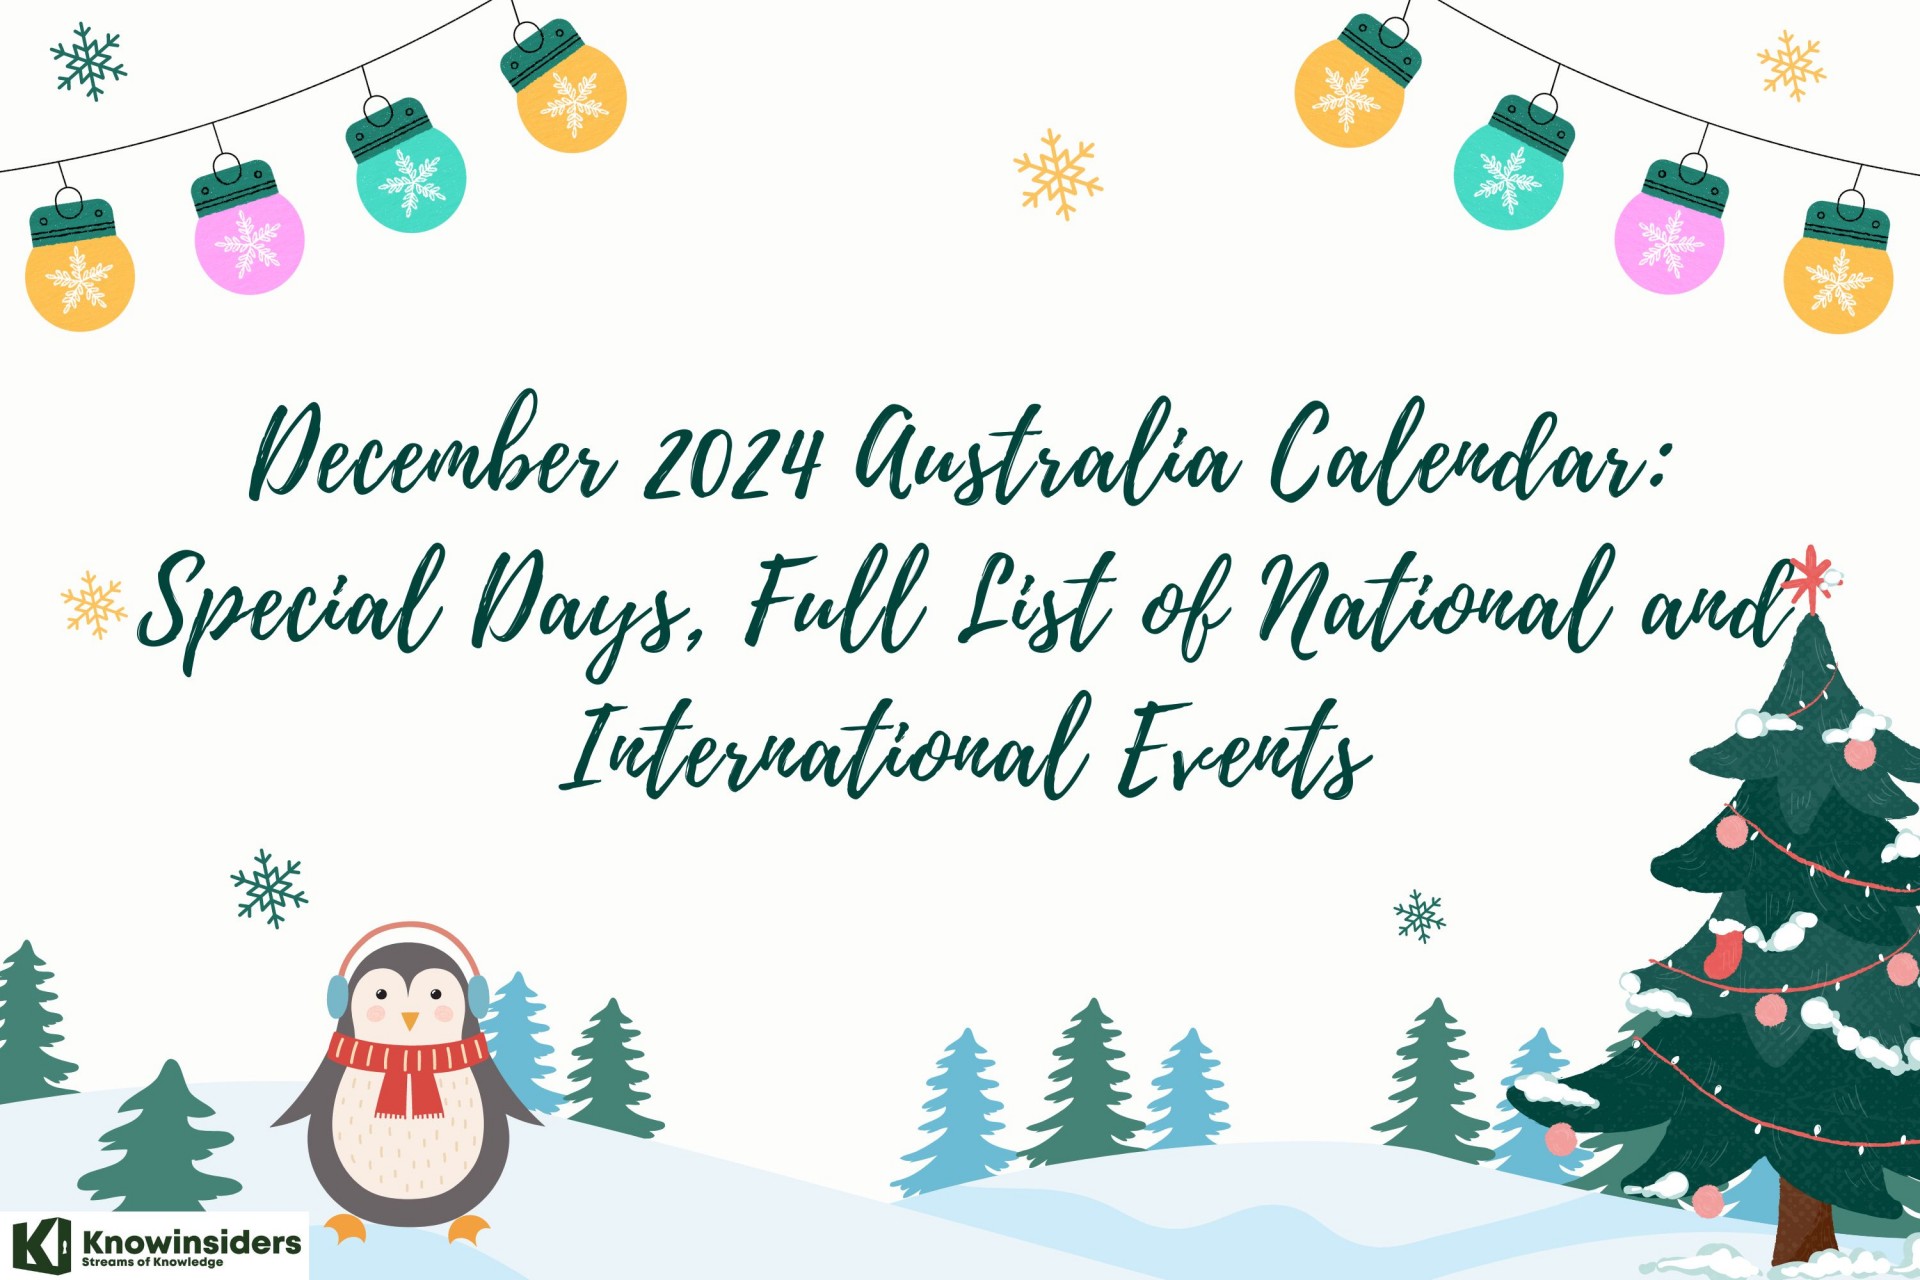 Australia Calendar December 2024: Special Days, Full List of National and International Events